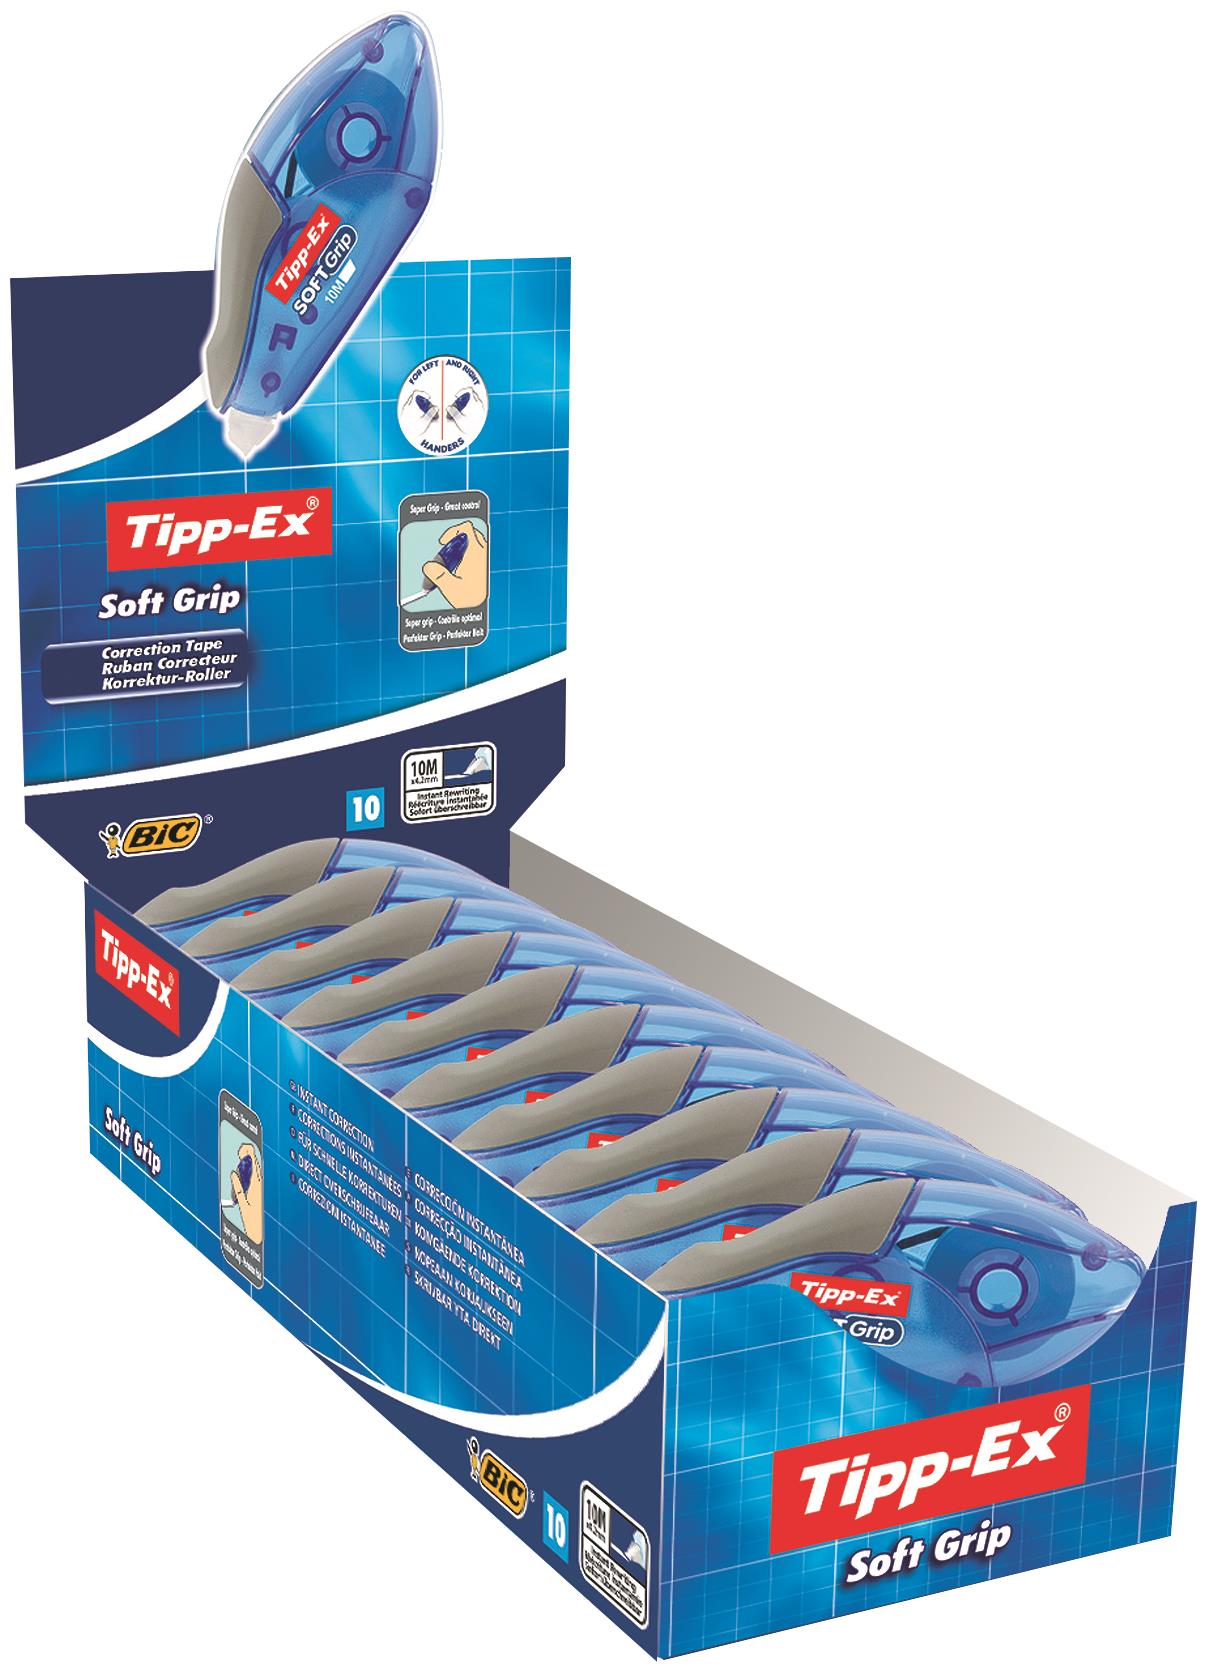 Tipp-Ex Soft Grip Correction Tape Roller 4.2mmx10m White (Pack 10)